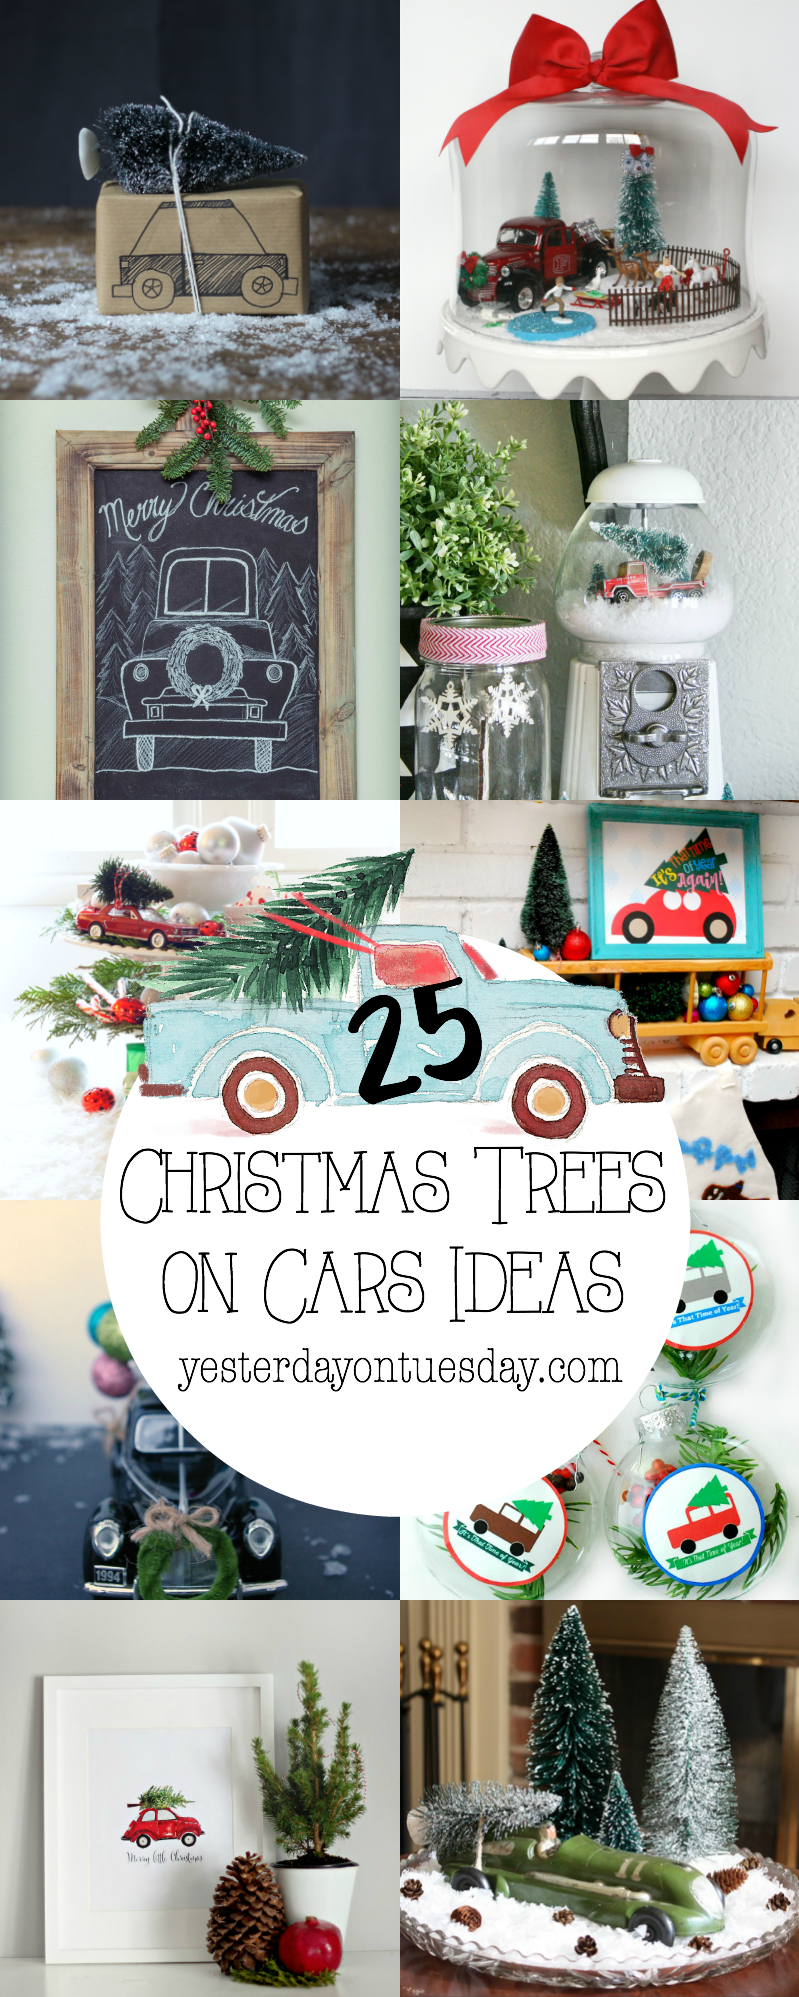 25 Christmas Trees on Cars Ideas